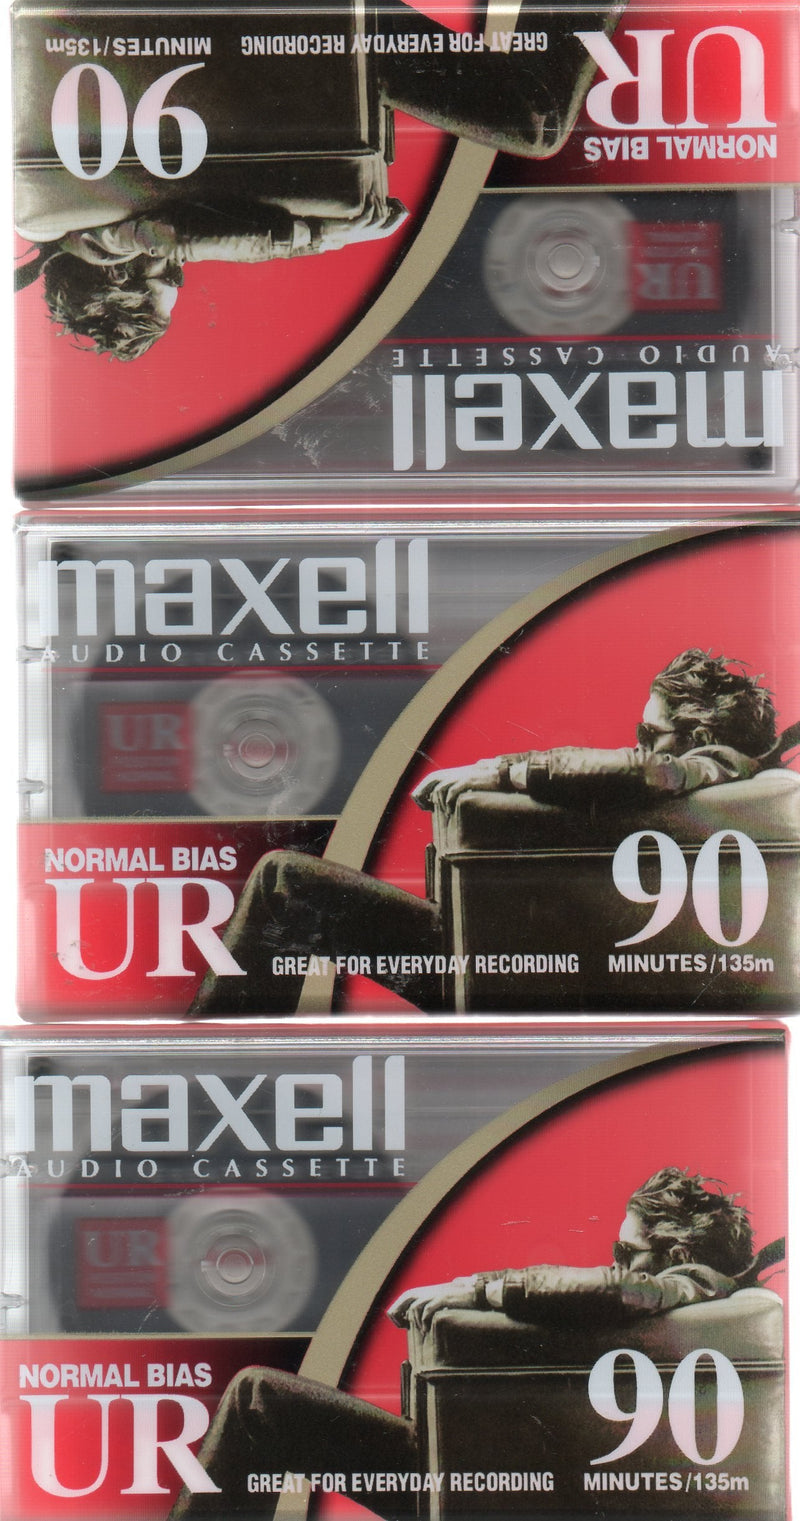  [AUSTRALIA] - Maxell Audio Cassette, Normal Bias UR 90 Minutes (Pack of 3)